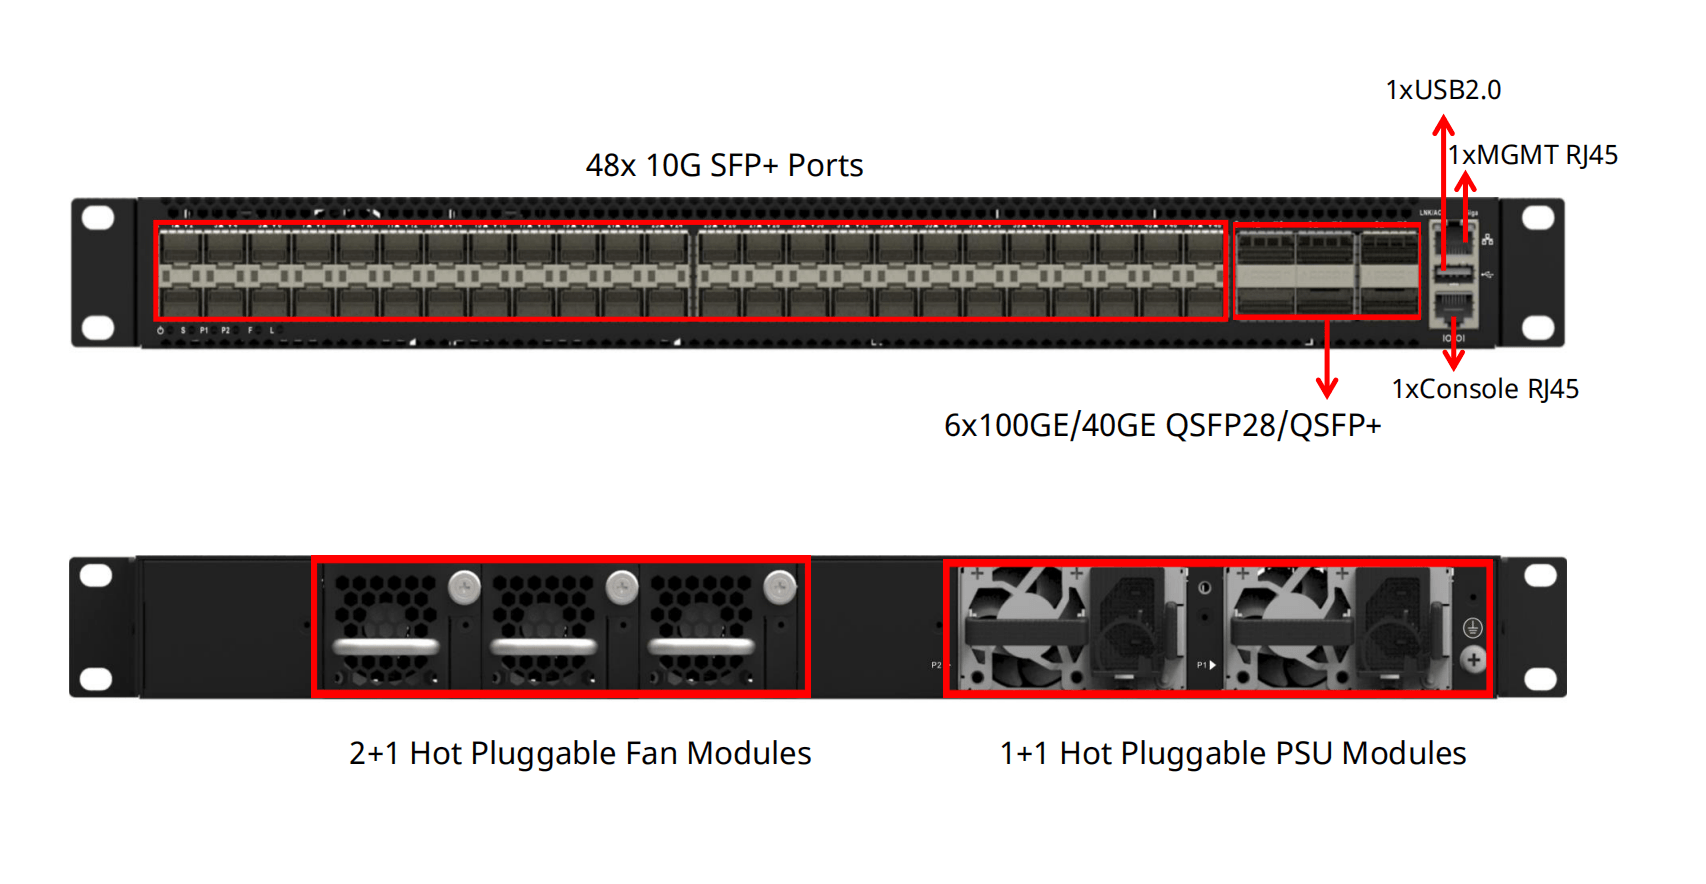 48x10Gb SFP+, 6x100Gb QSFP28 L3 leaf & Core Switch